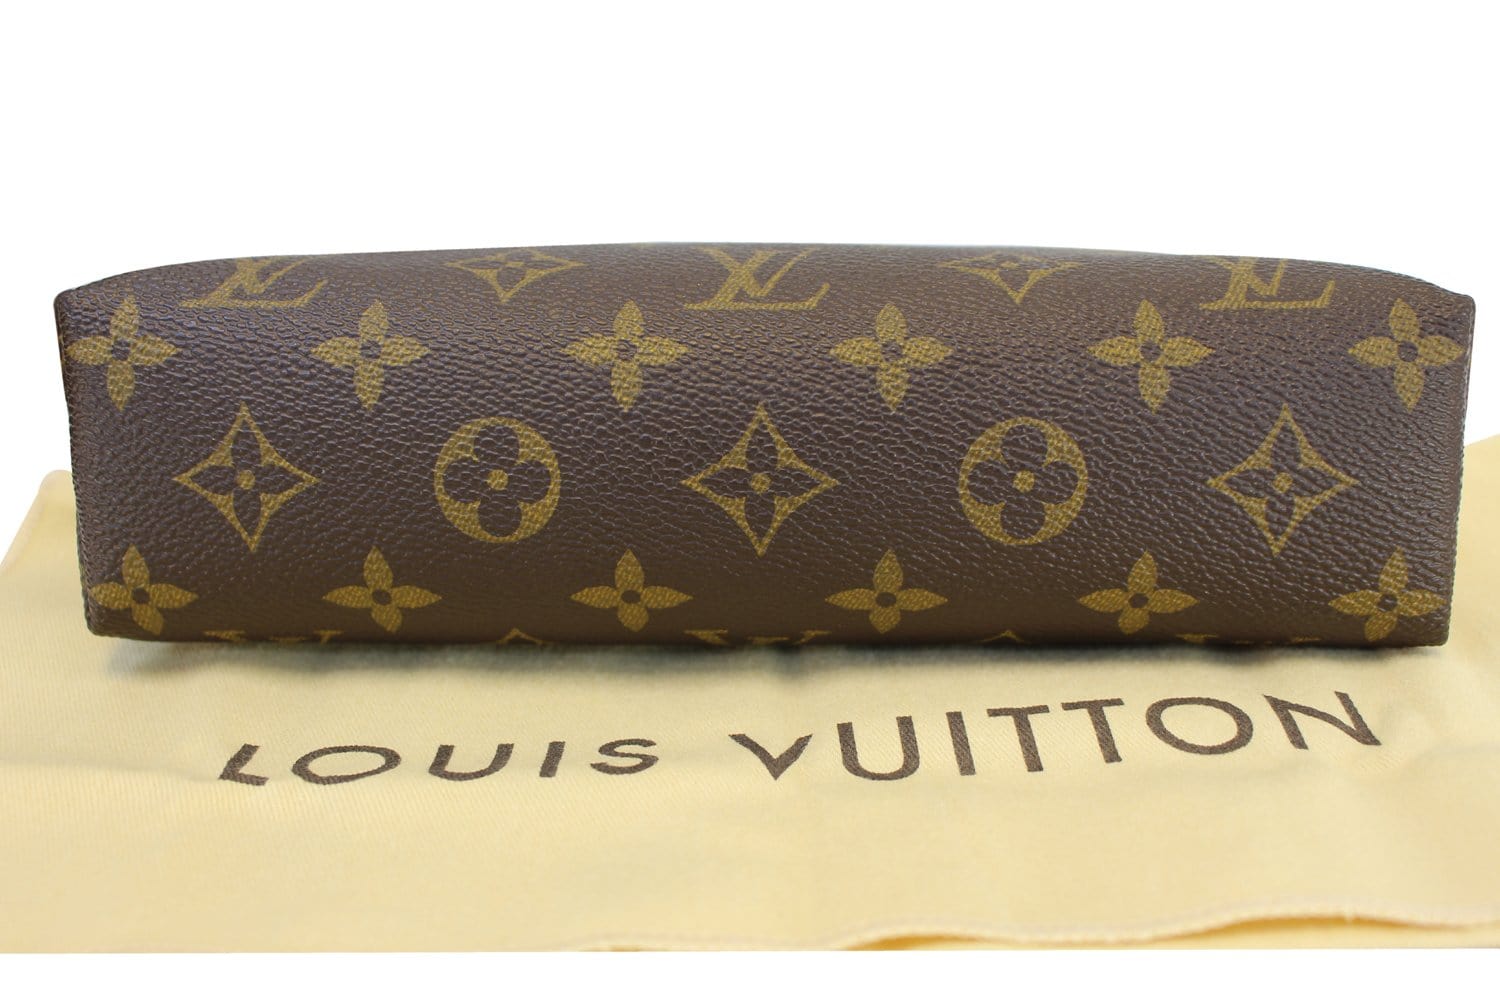 LOUIS VUITTON Monogram Cosmetic Pouch GM 1255694